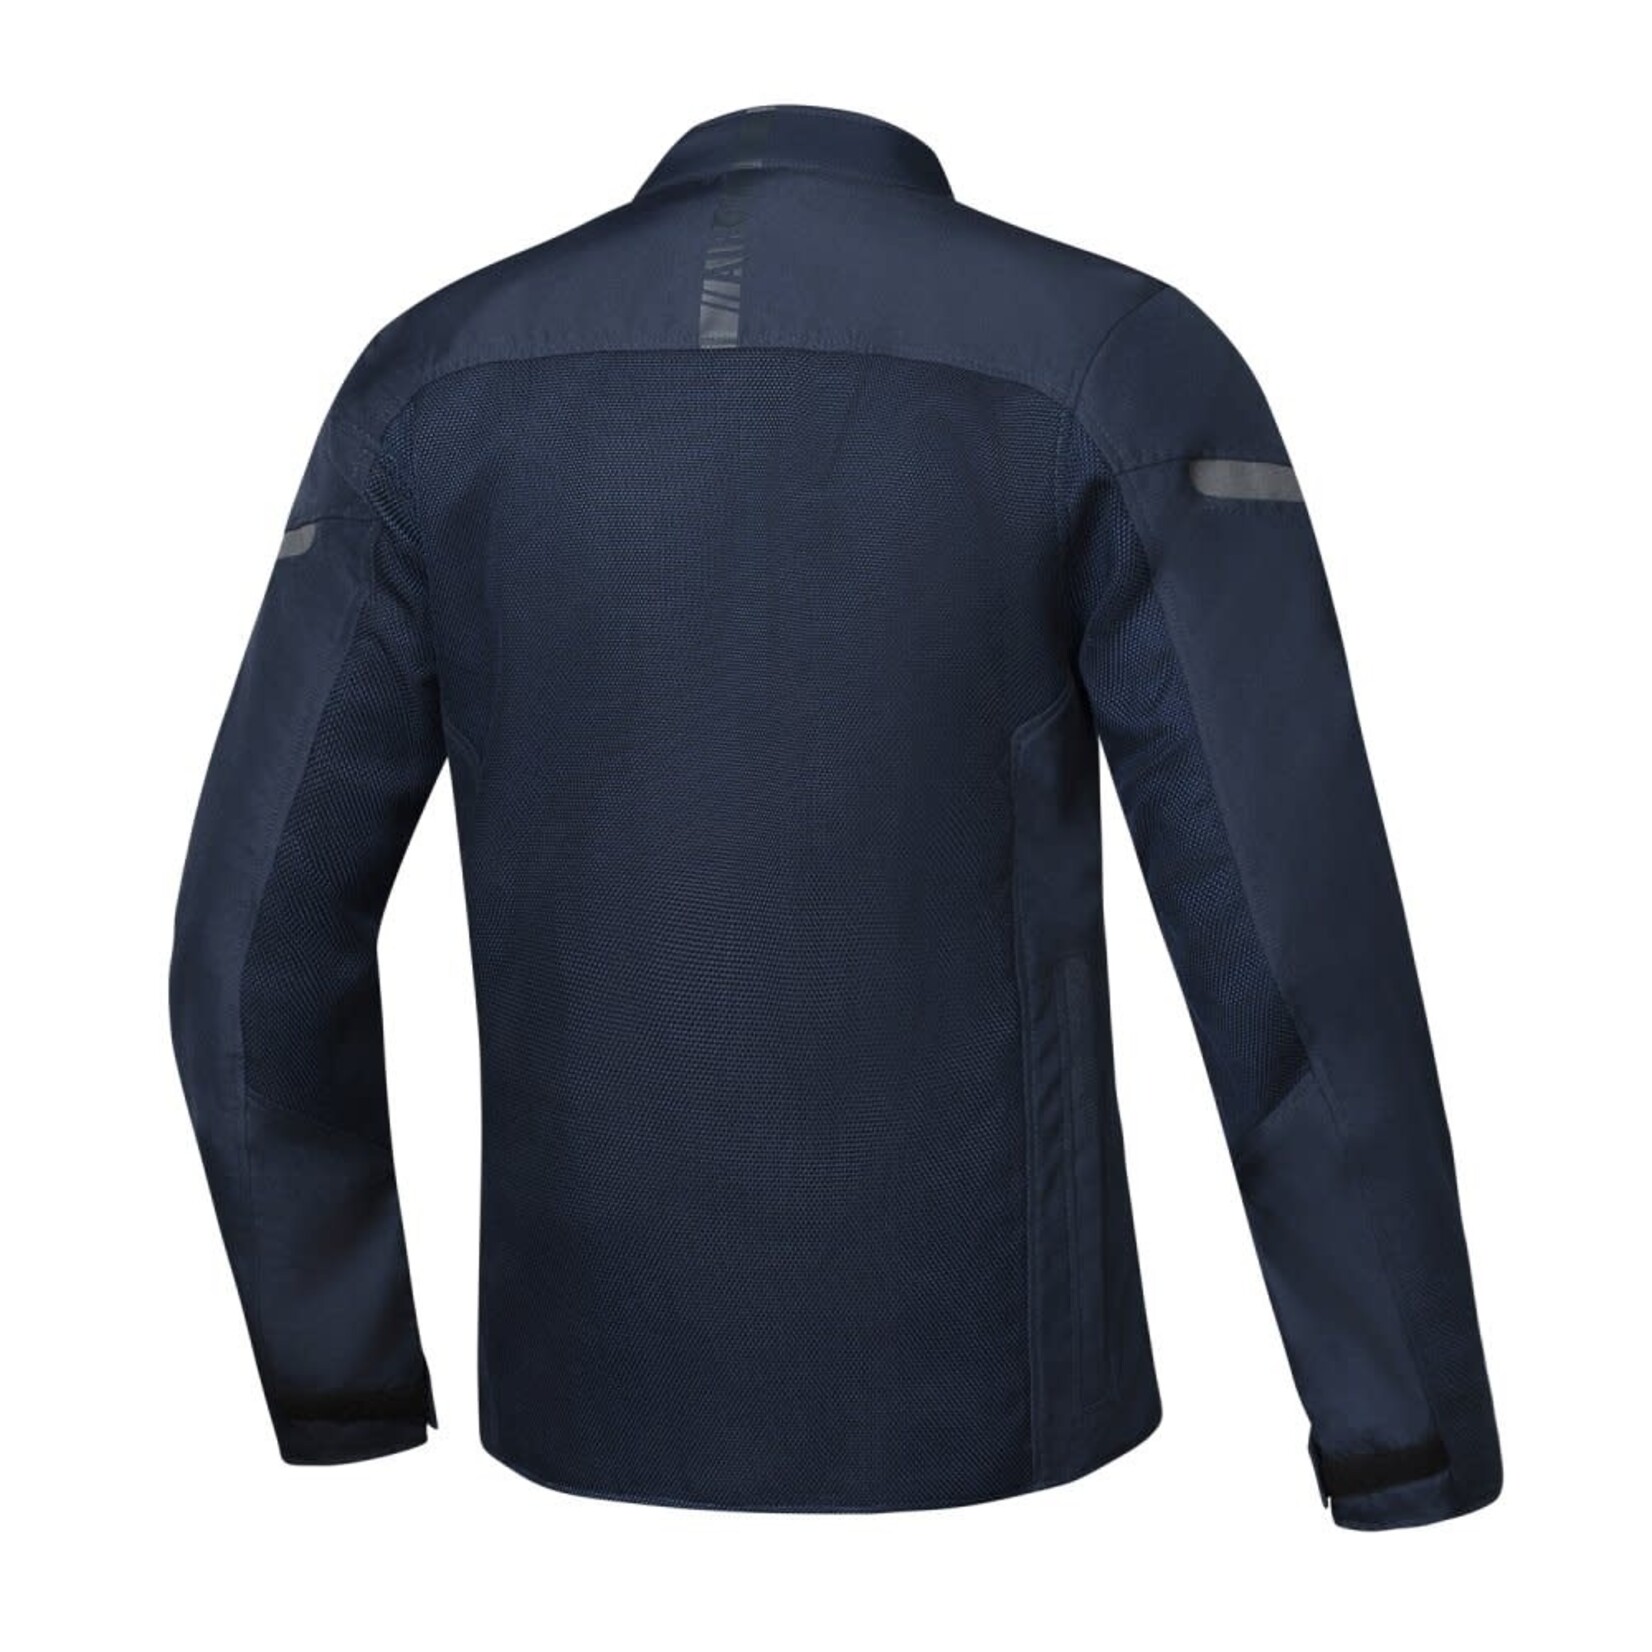 Ixon Ixon jacket textile fresh slim navy